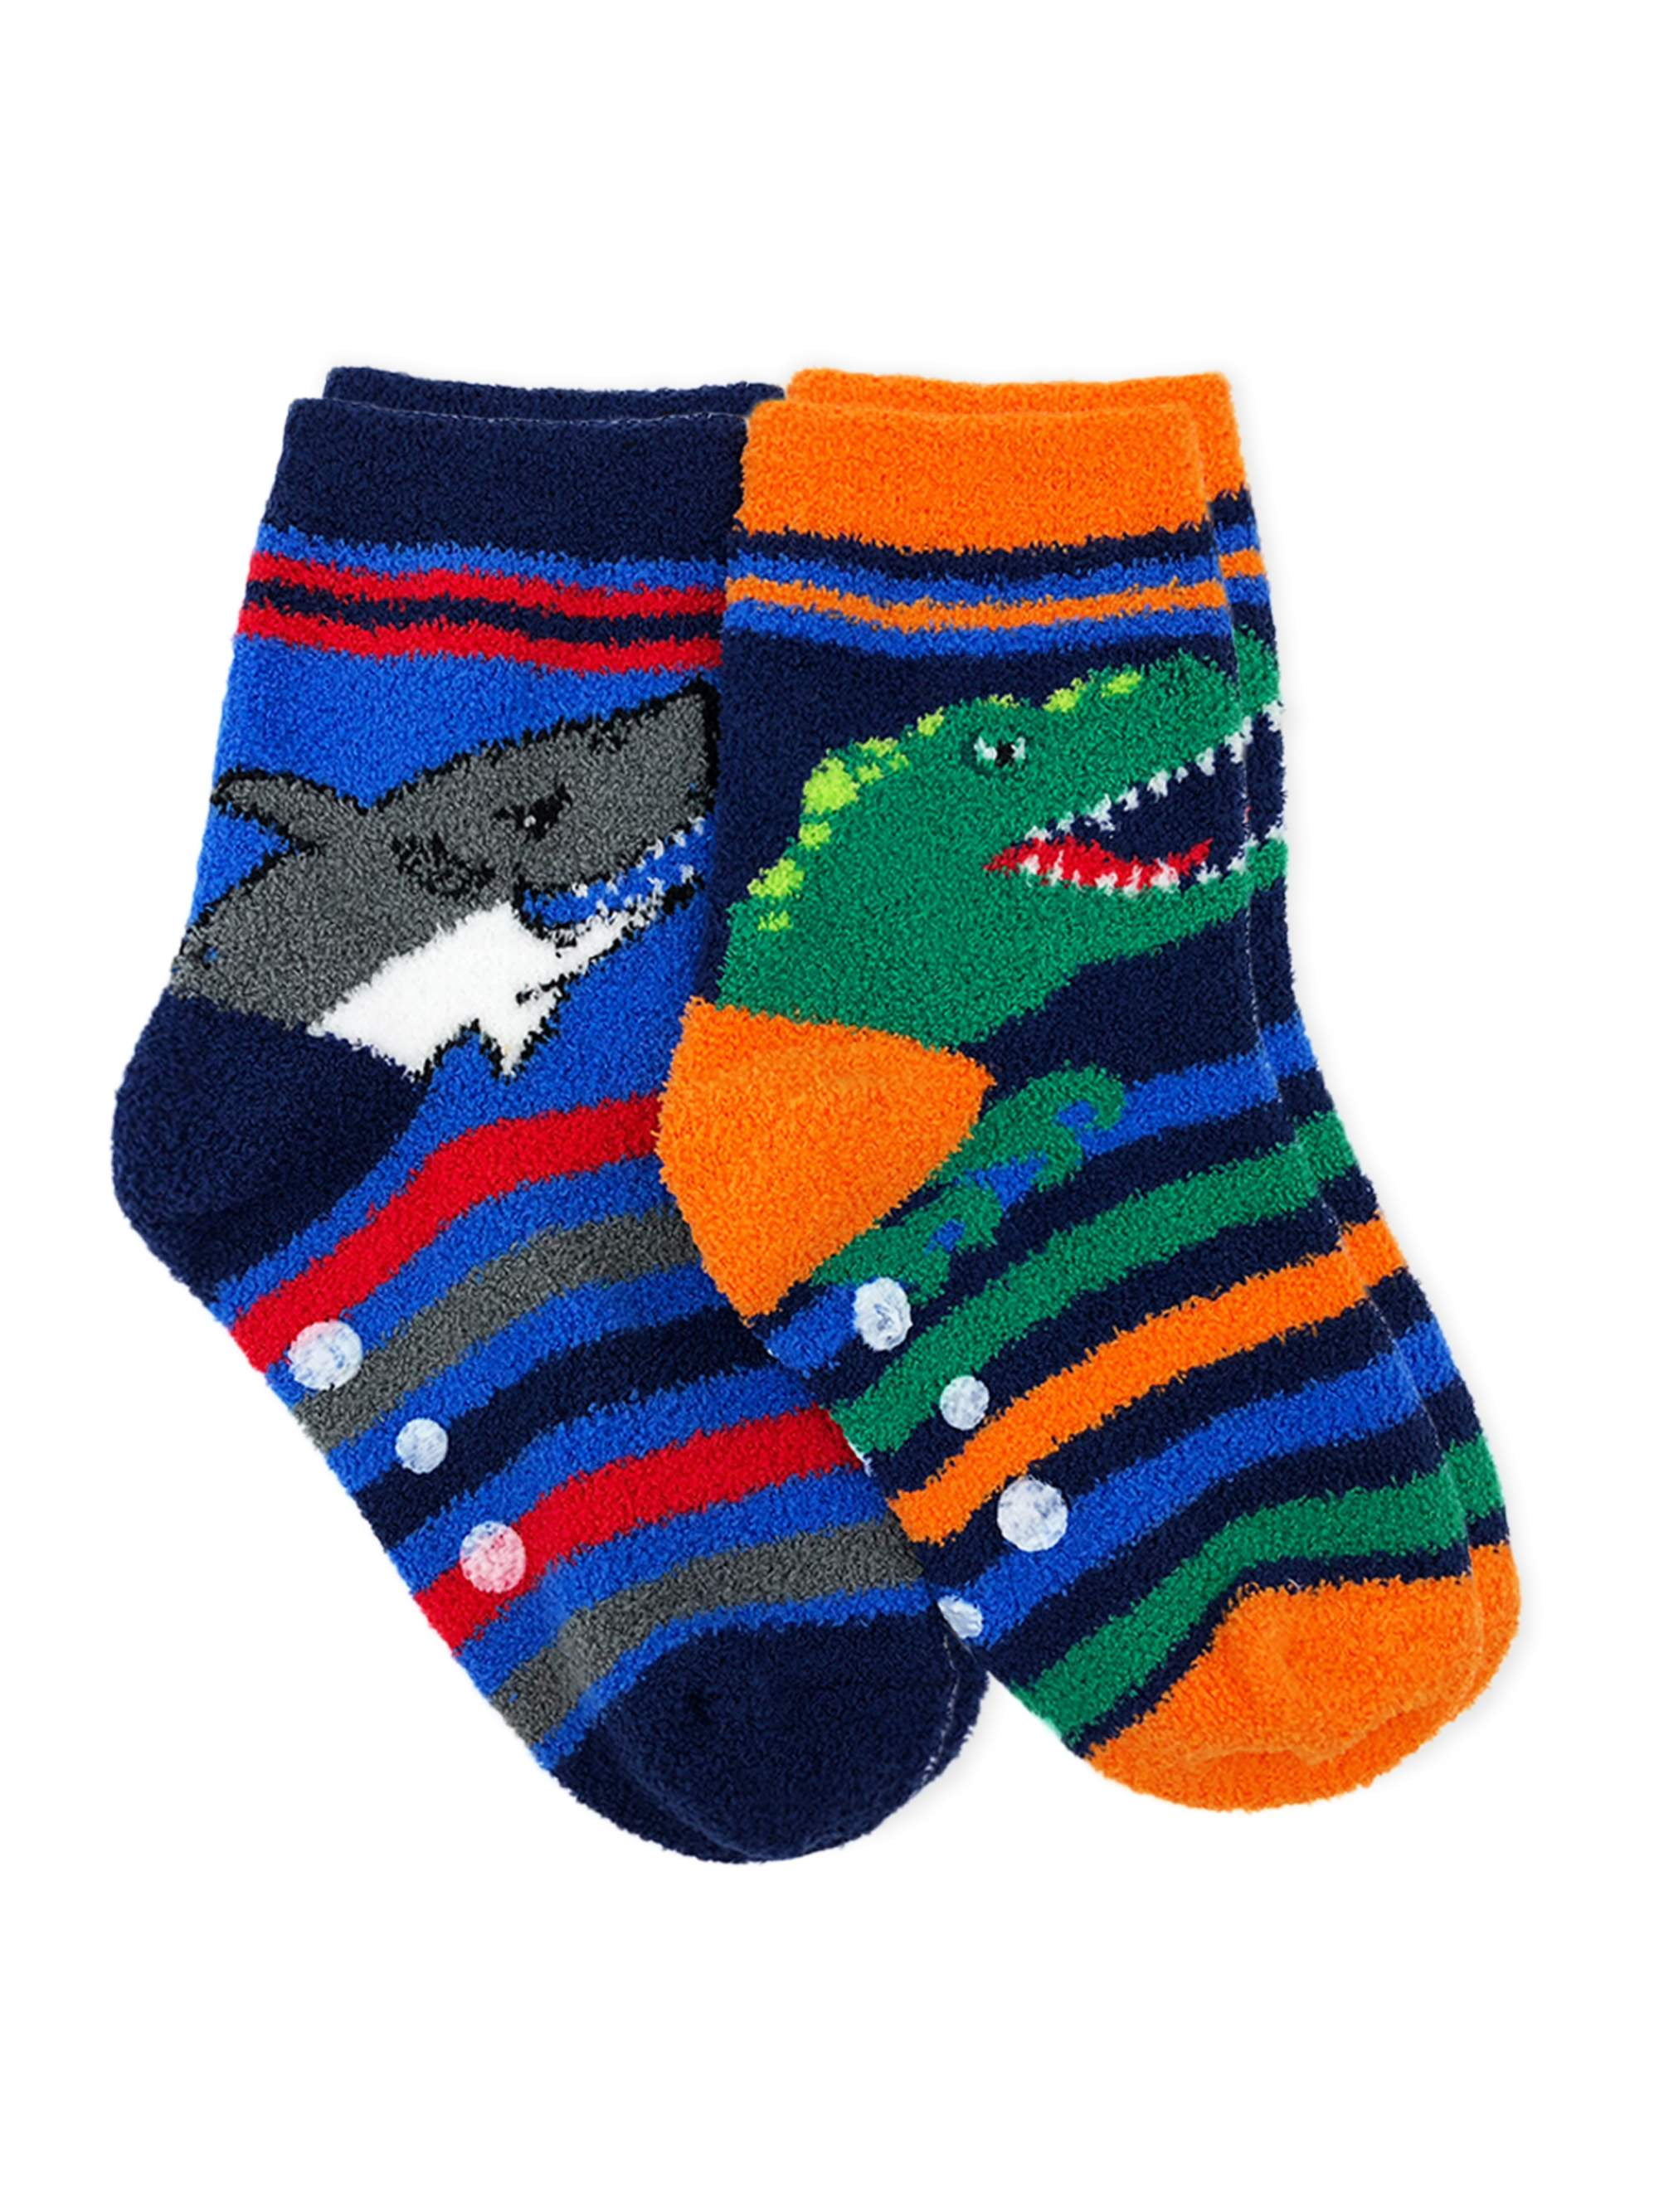 New babyGap GAP BOYS baby toddler Gripper socks 4-pack Tiger Dino Whale 0-12 Mon